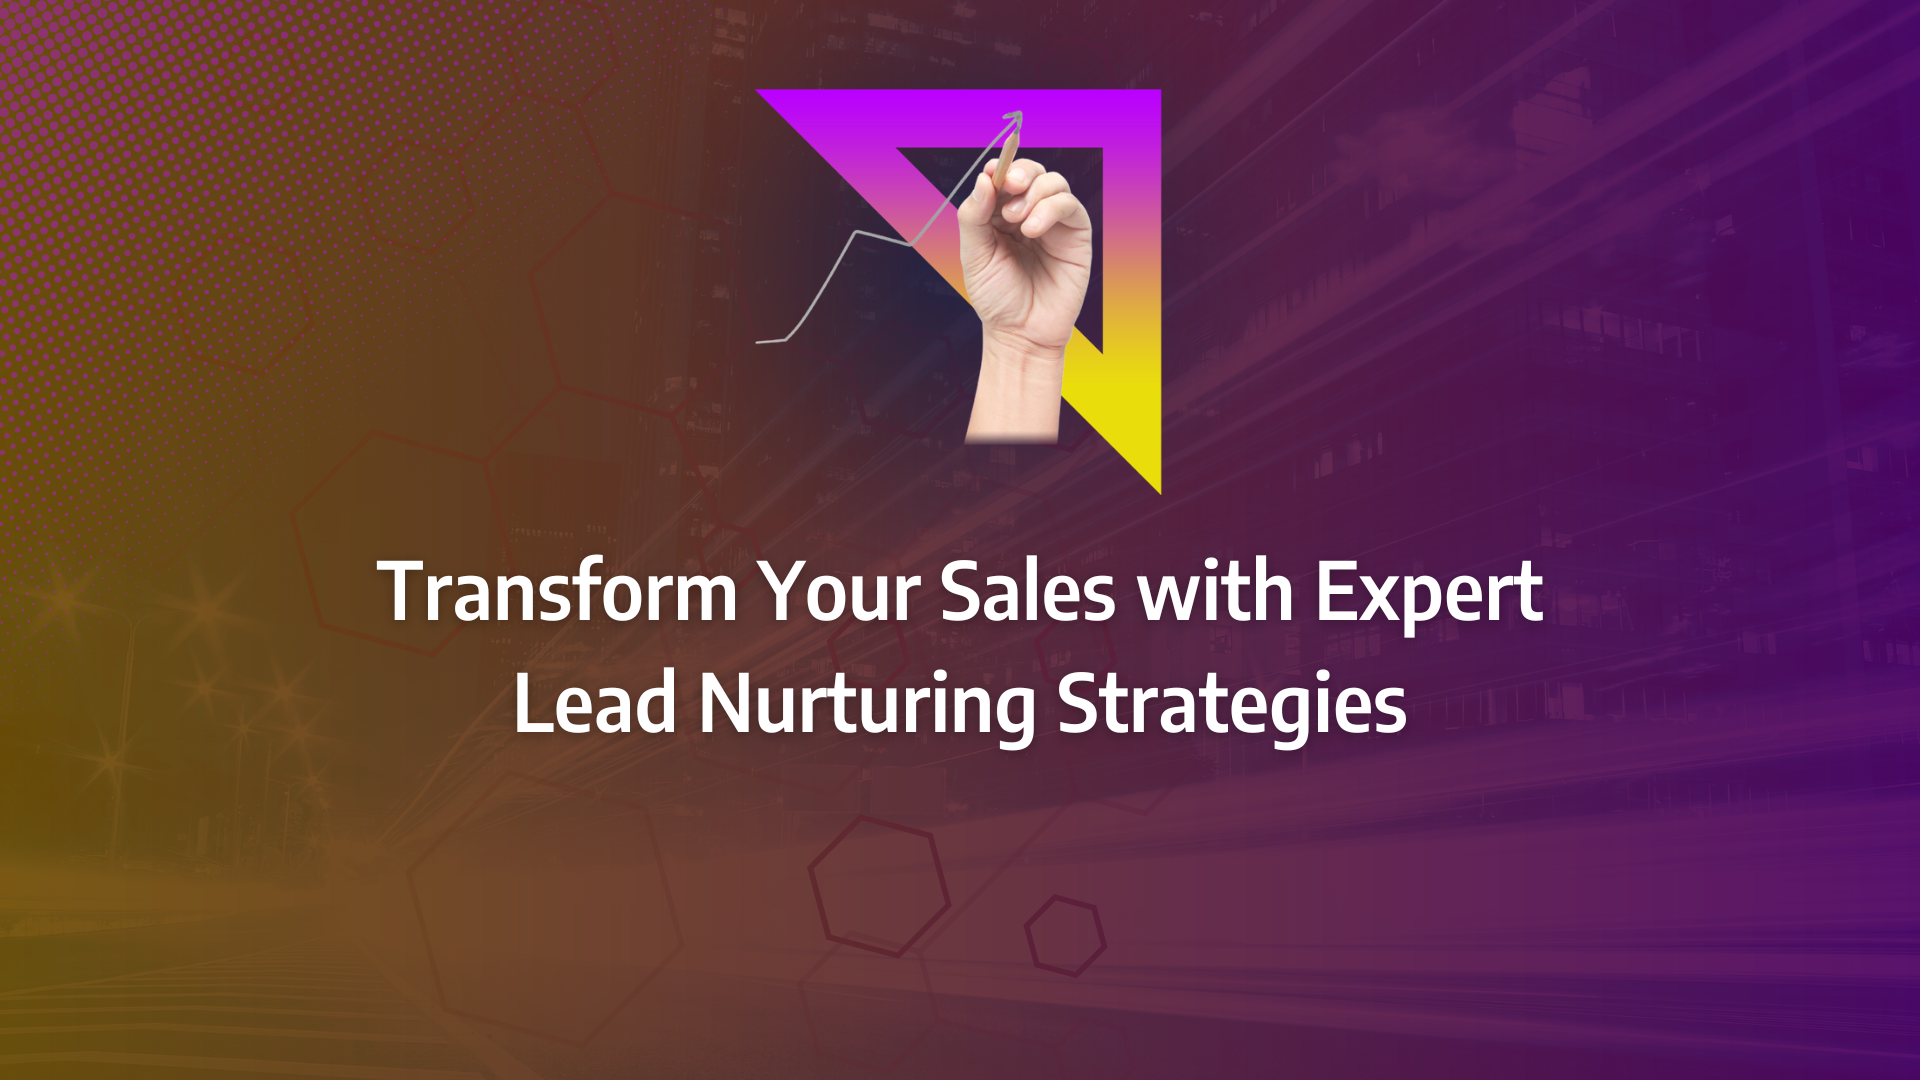 the ultimate guide to nurturing leads incorporating nurturing strategy, lead scoring, nurturing campaigns, lead management, lead nurturing tatics